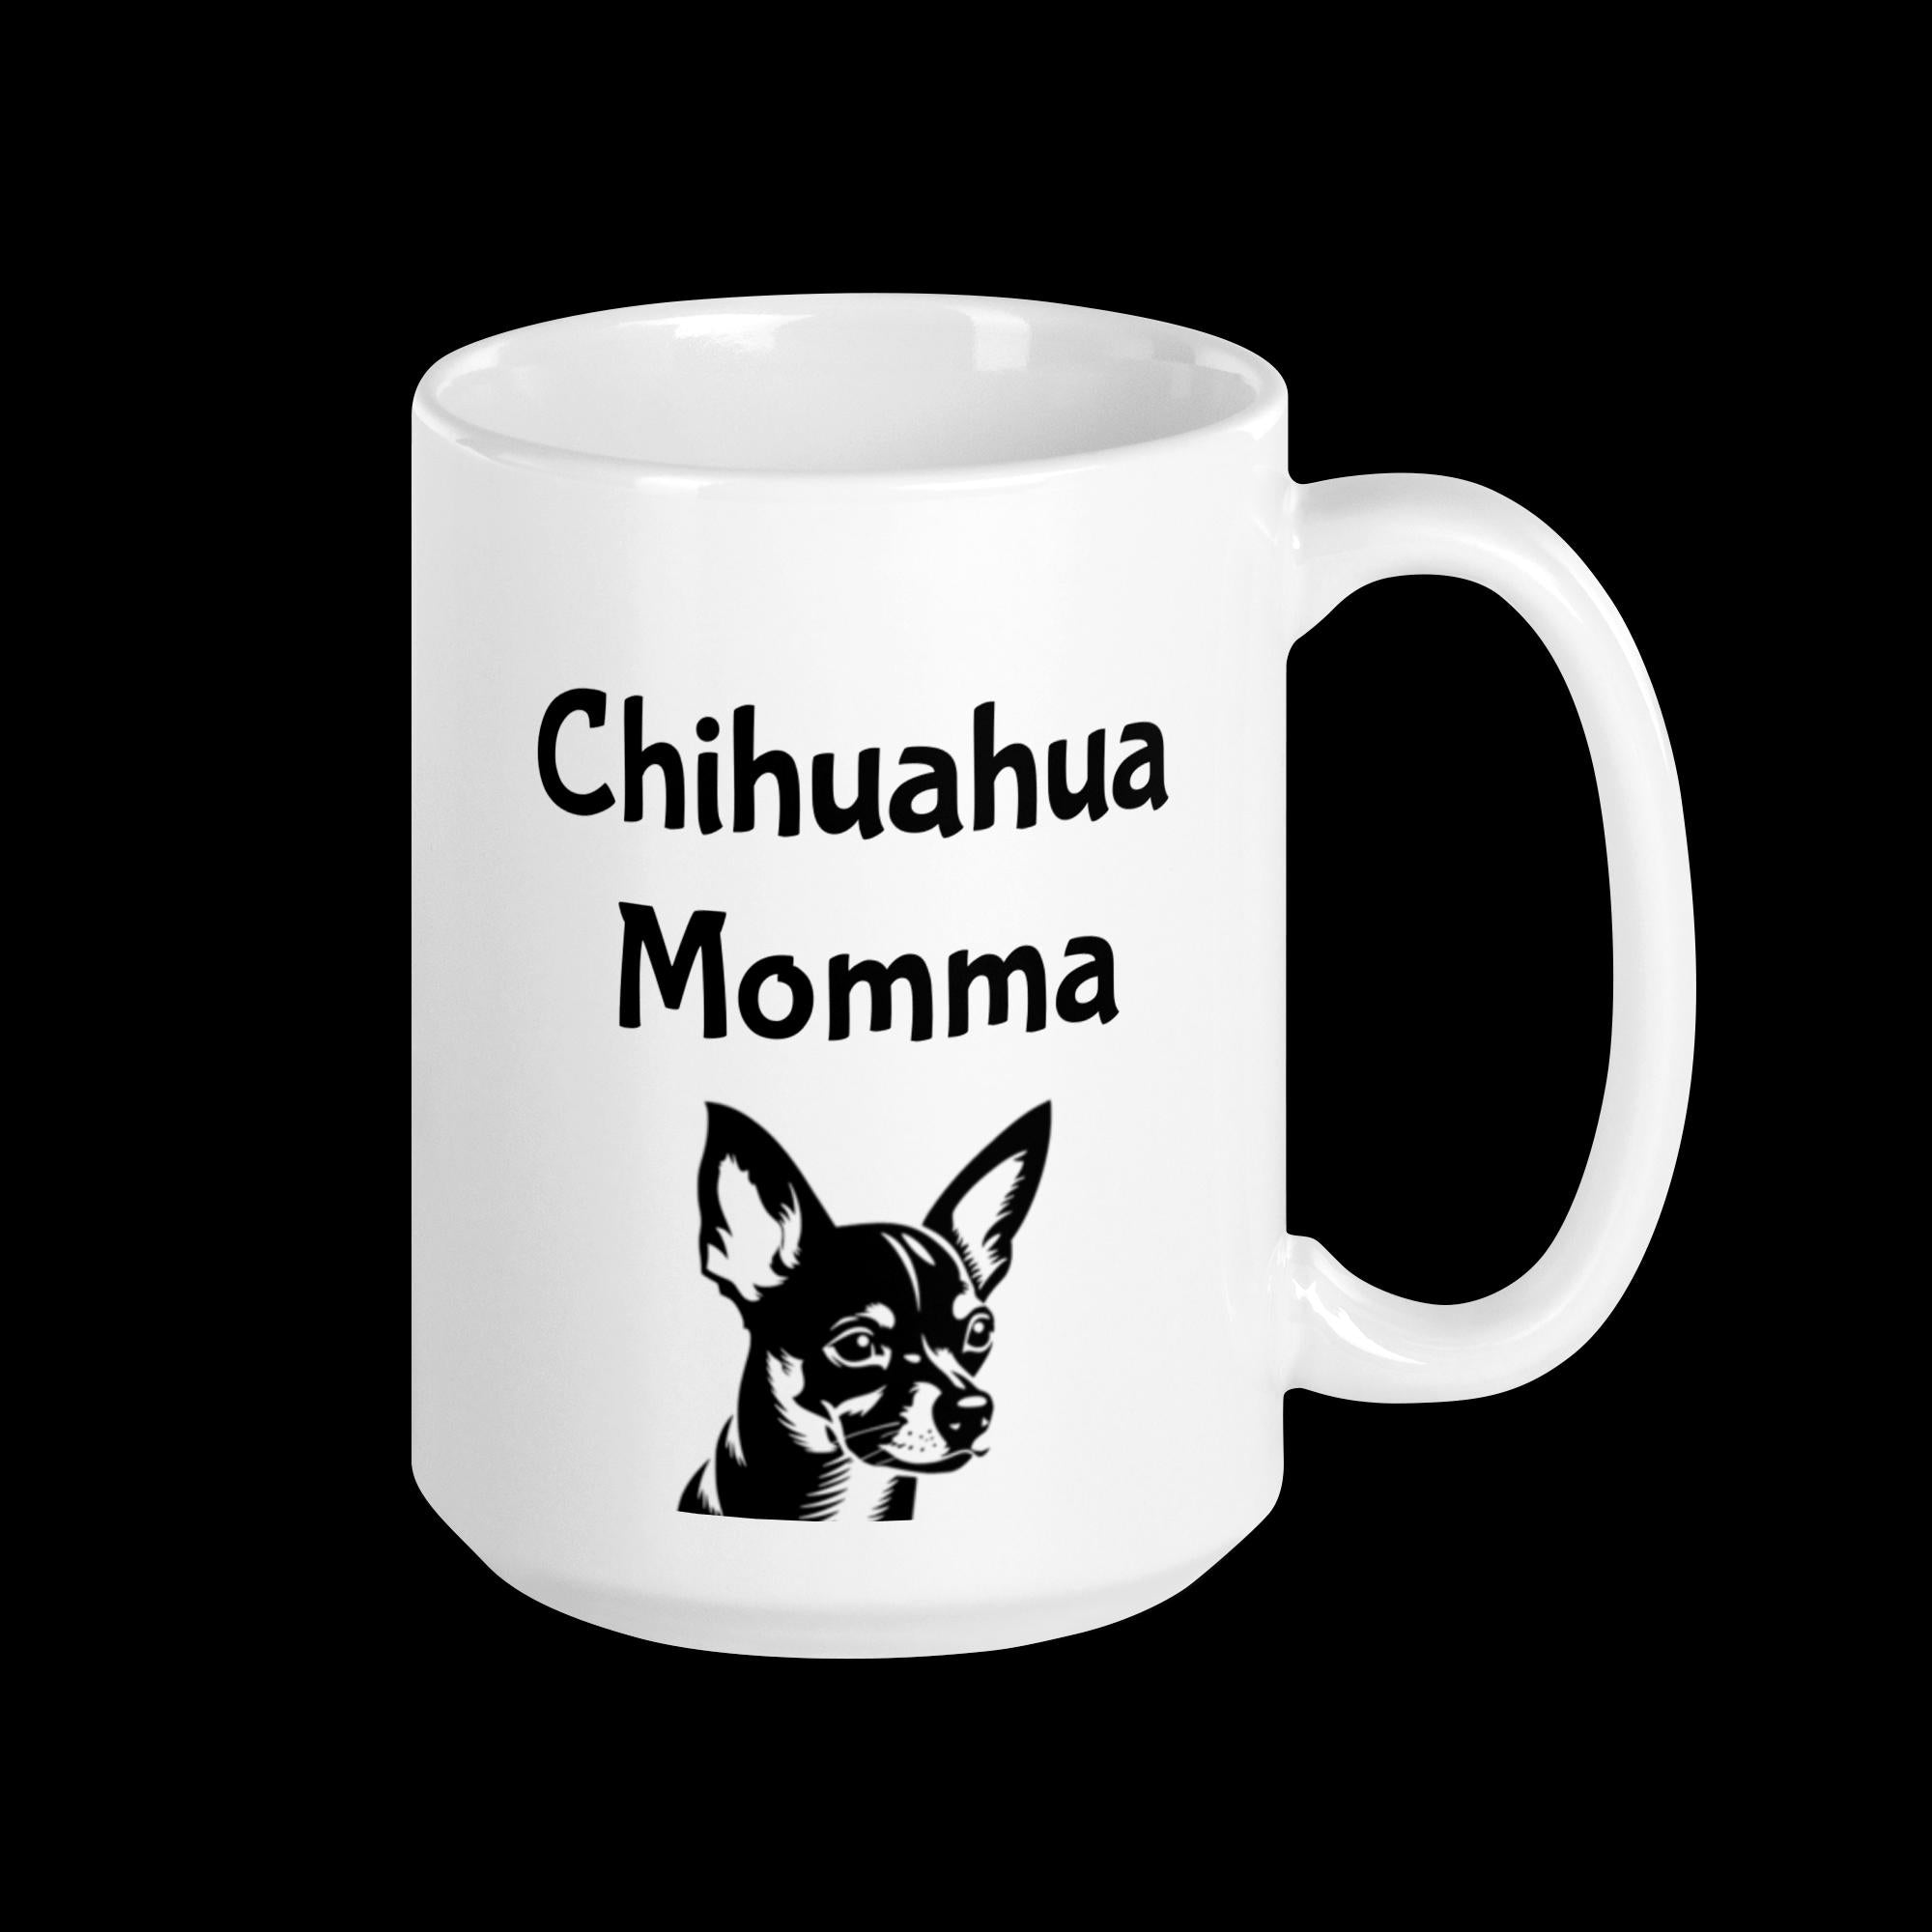 Chihuahua Momma White Glossy Mug